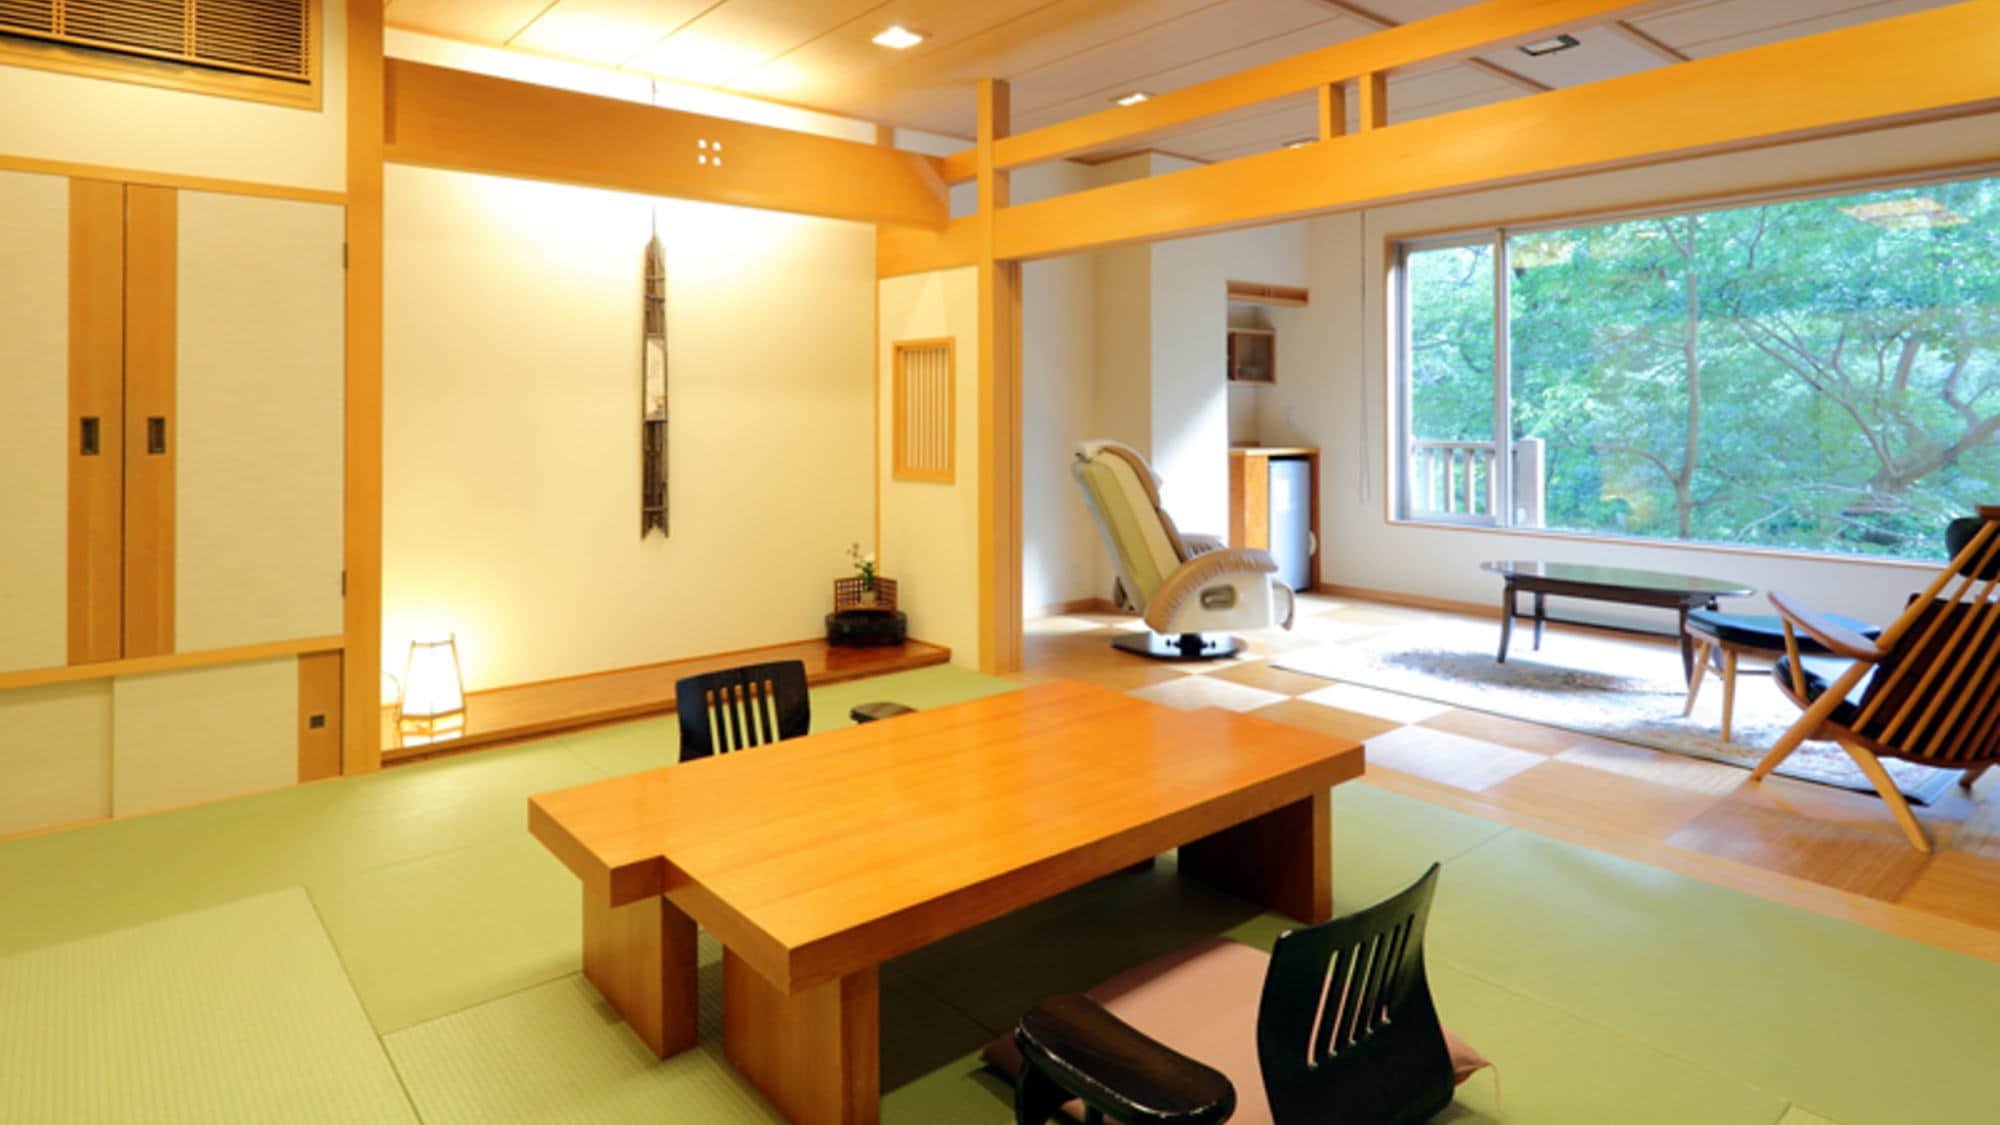 [Kamar dengan lantai ruang tamu] Jepang 10 tikar tatami + lantai bambu 8 ruang tamu tatami + DVD